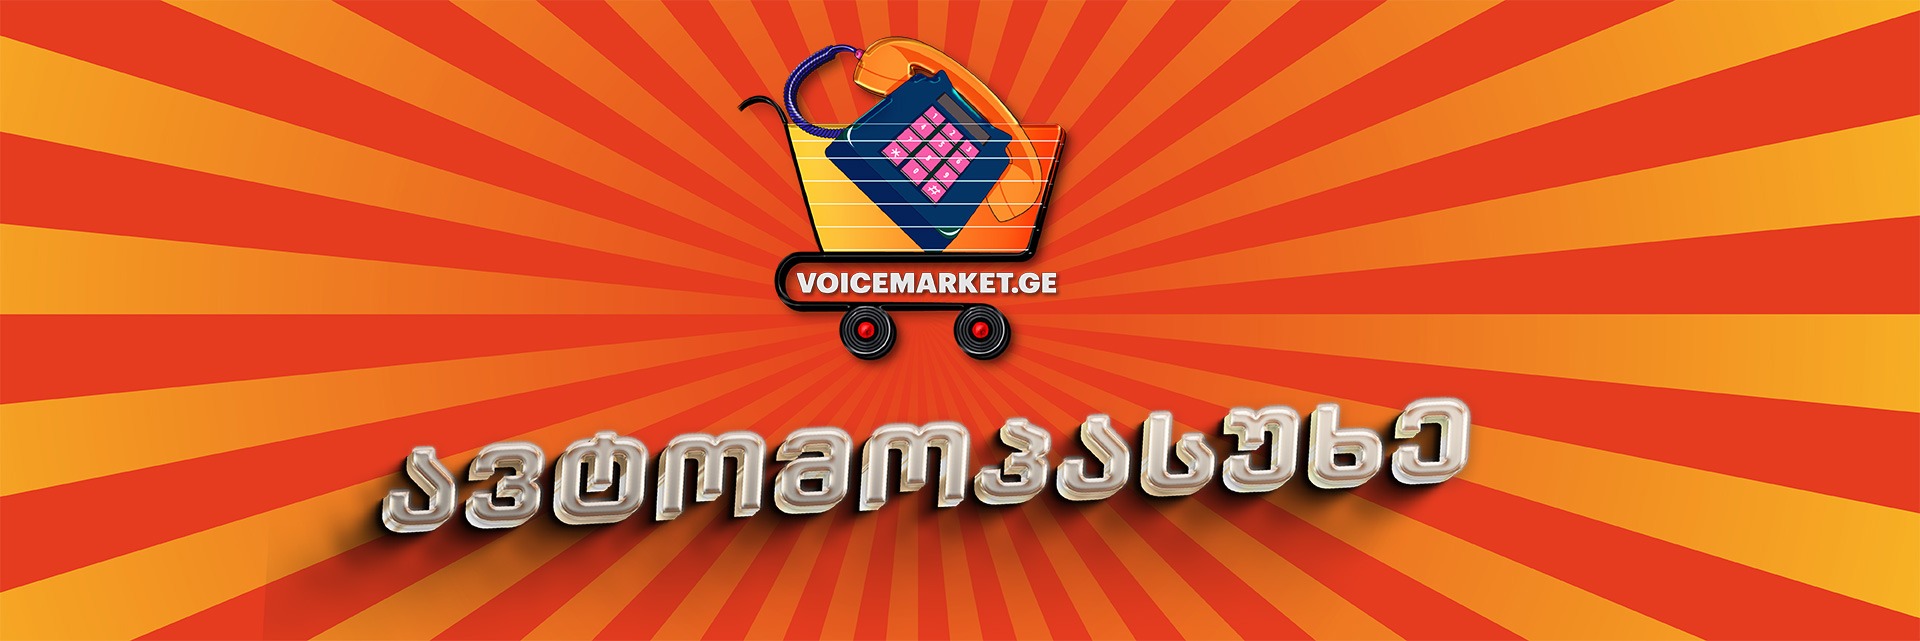 Voice Market